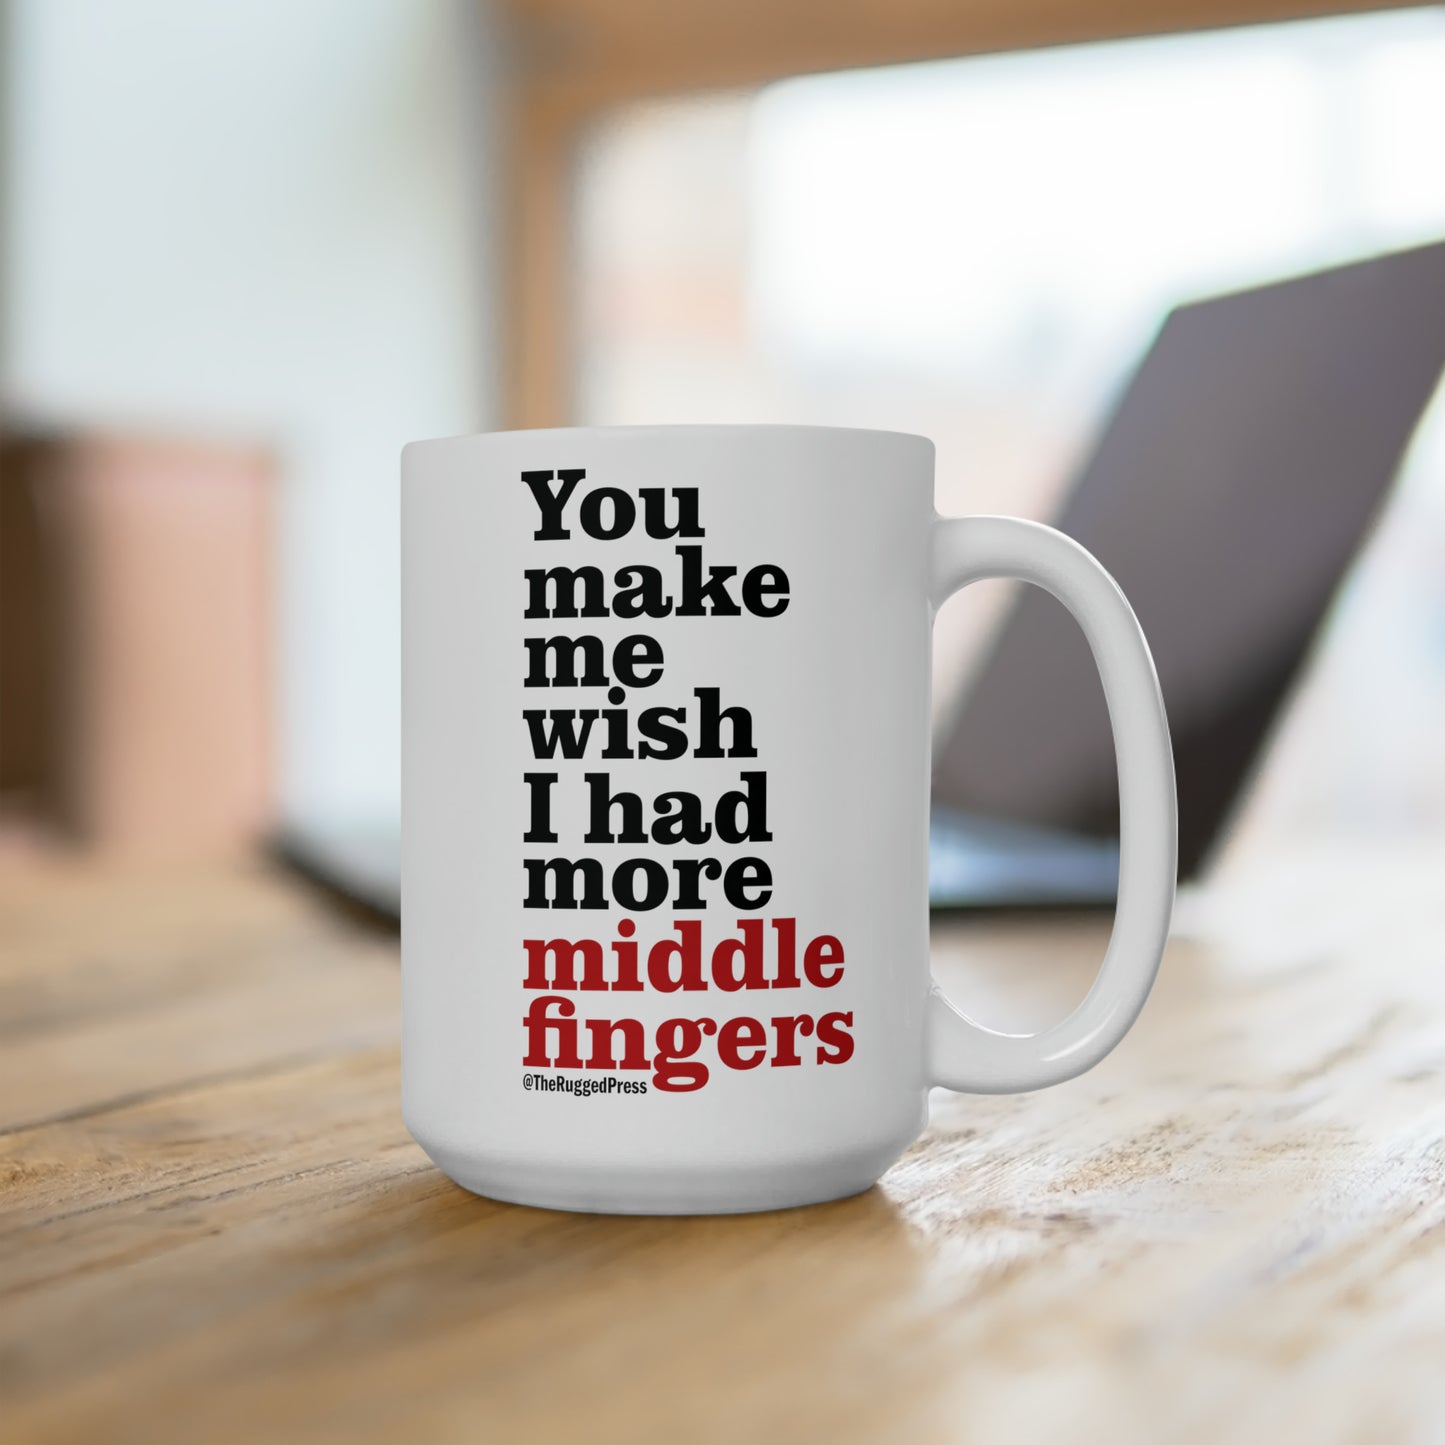 You make me wish I had more middle fingers - Ceramic Mug 15oz